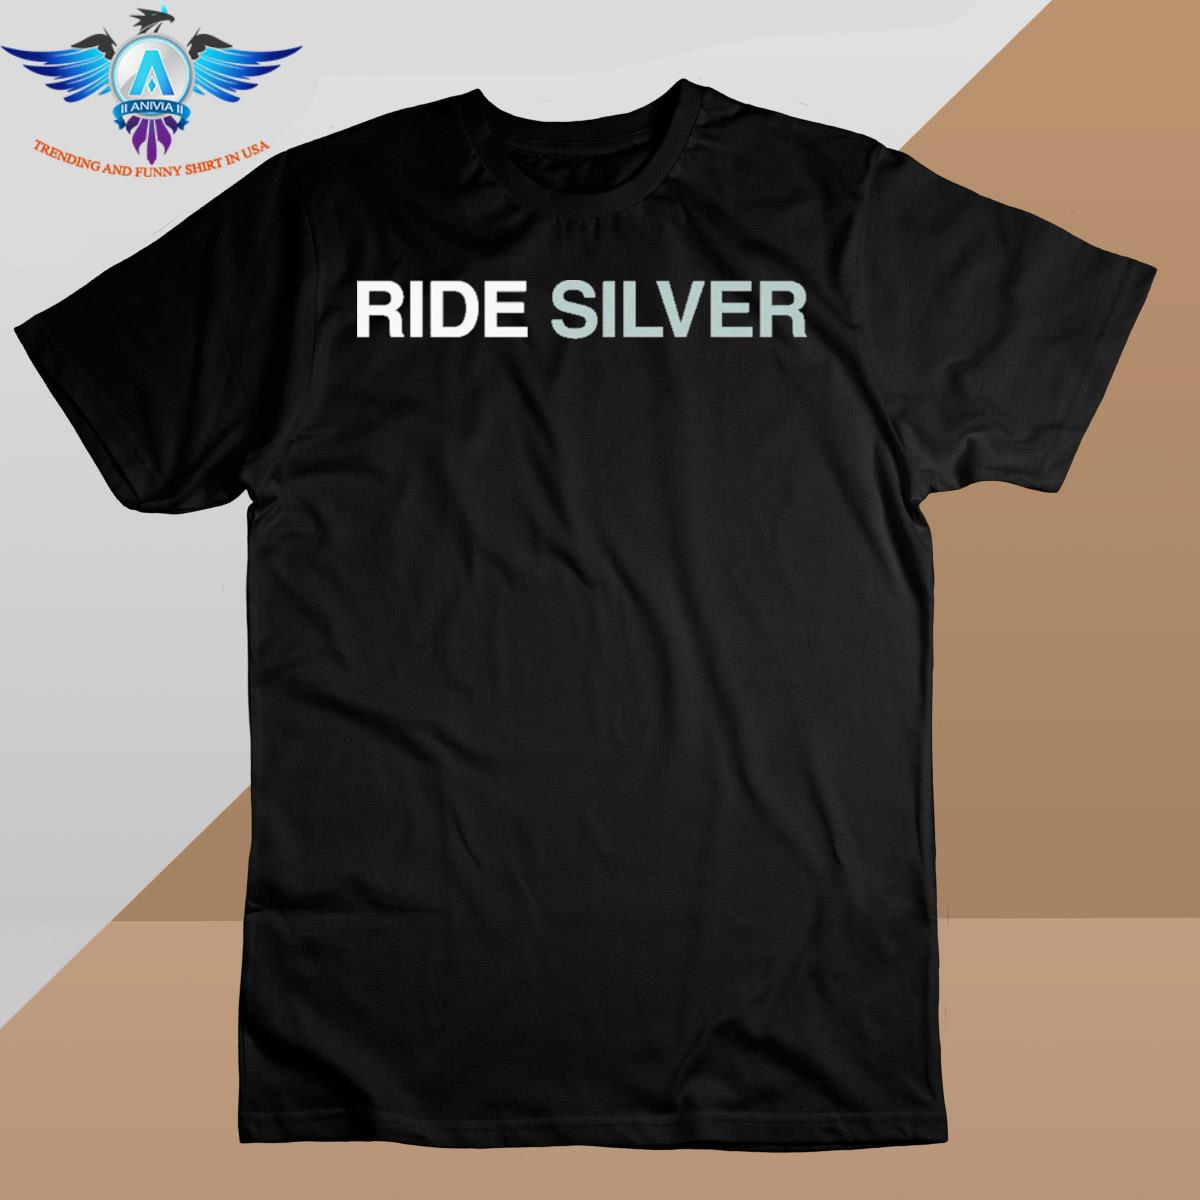 Randy clarke ride silver shirt